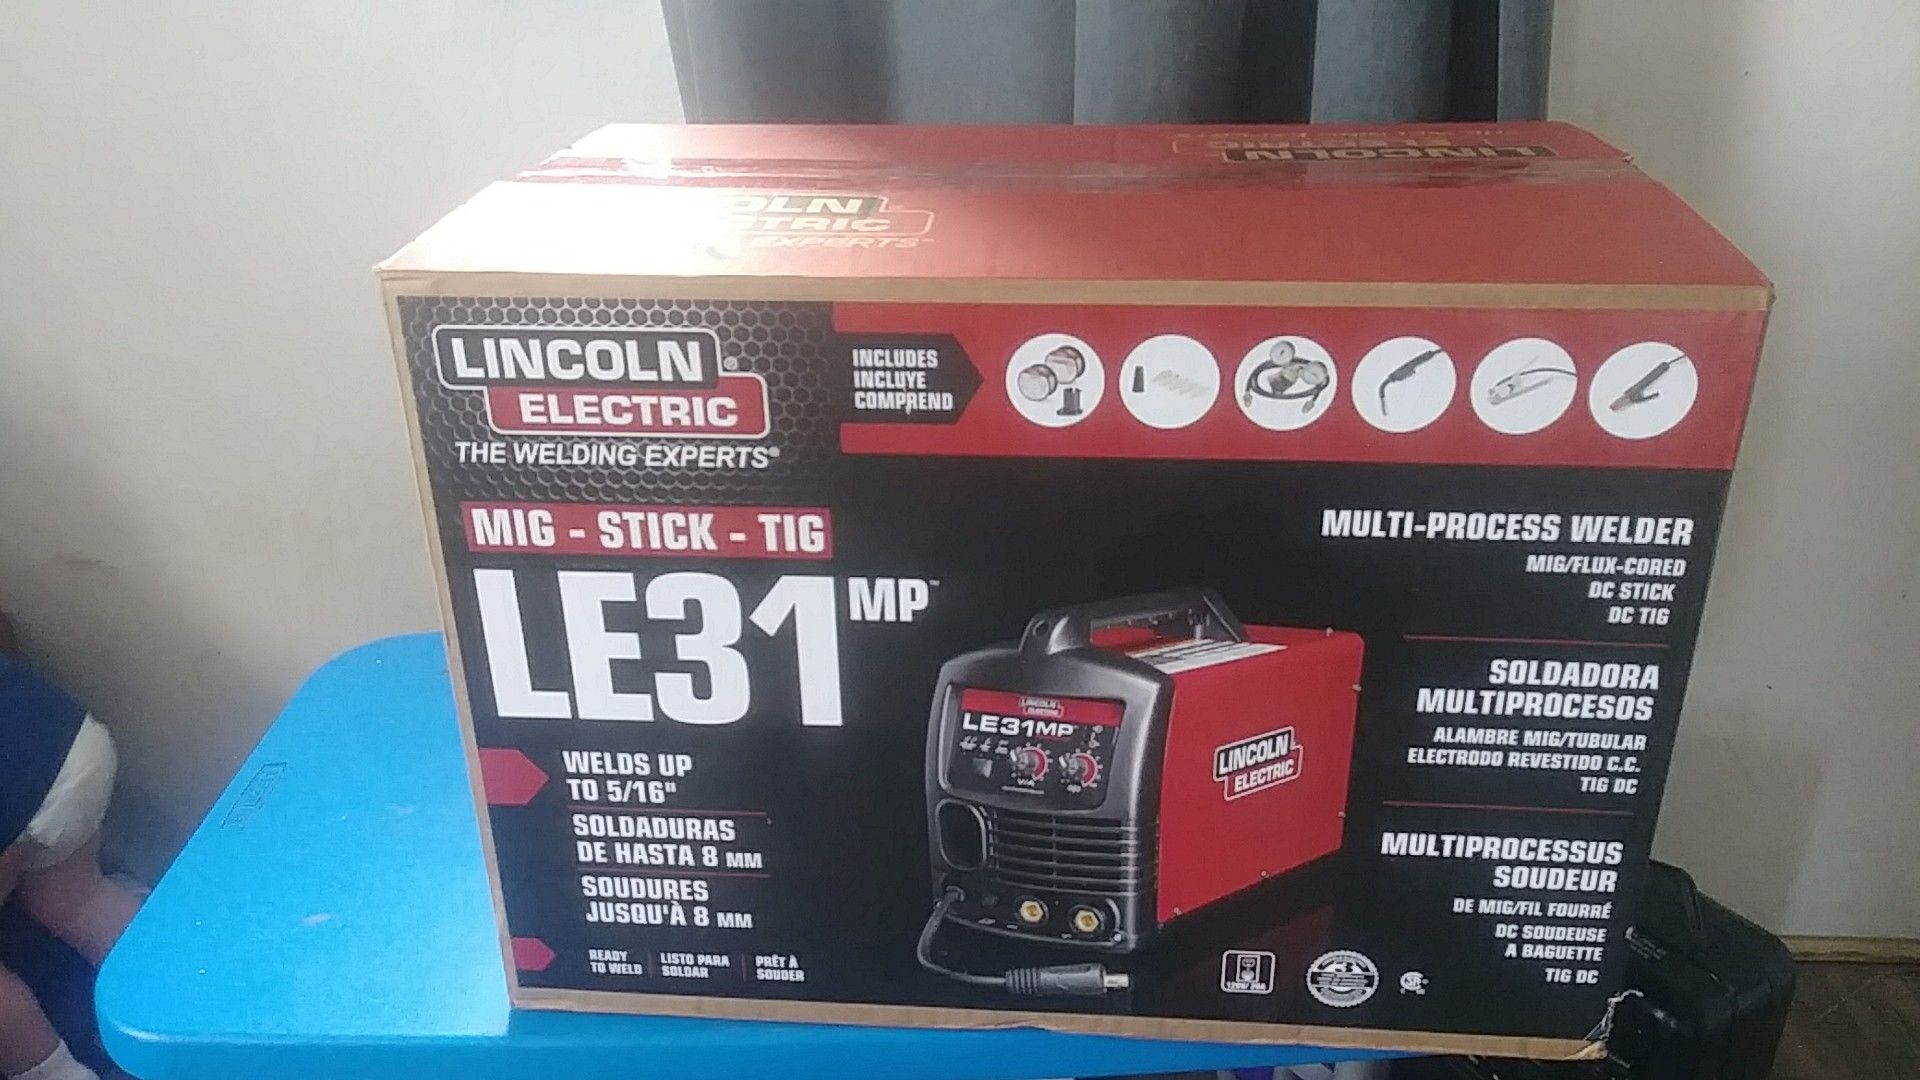 Lincoln electric LE31 mp welder